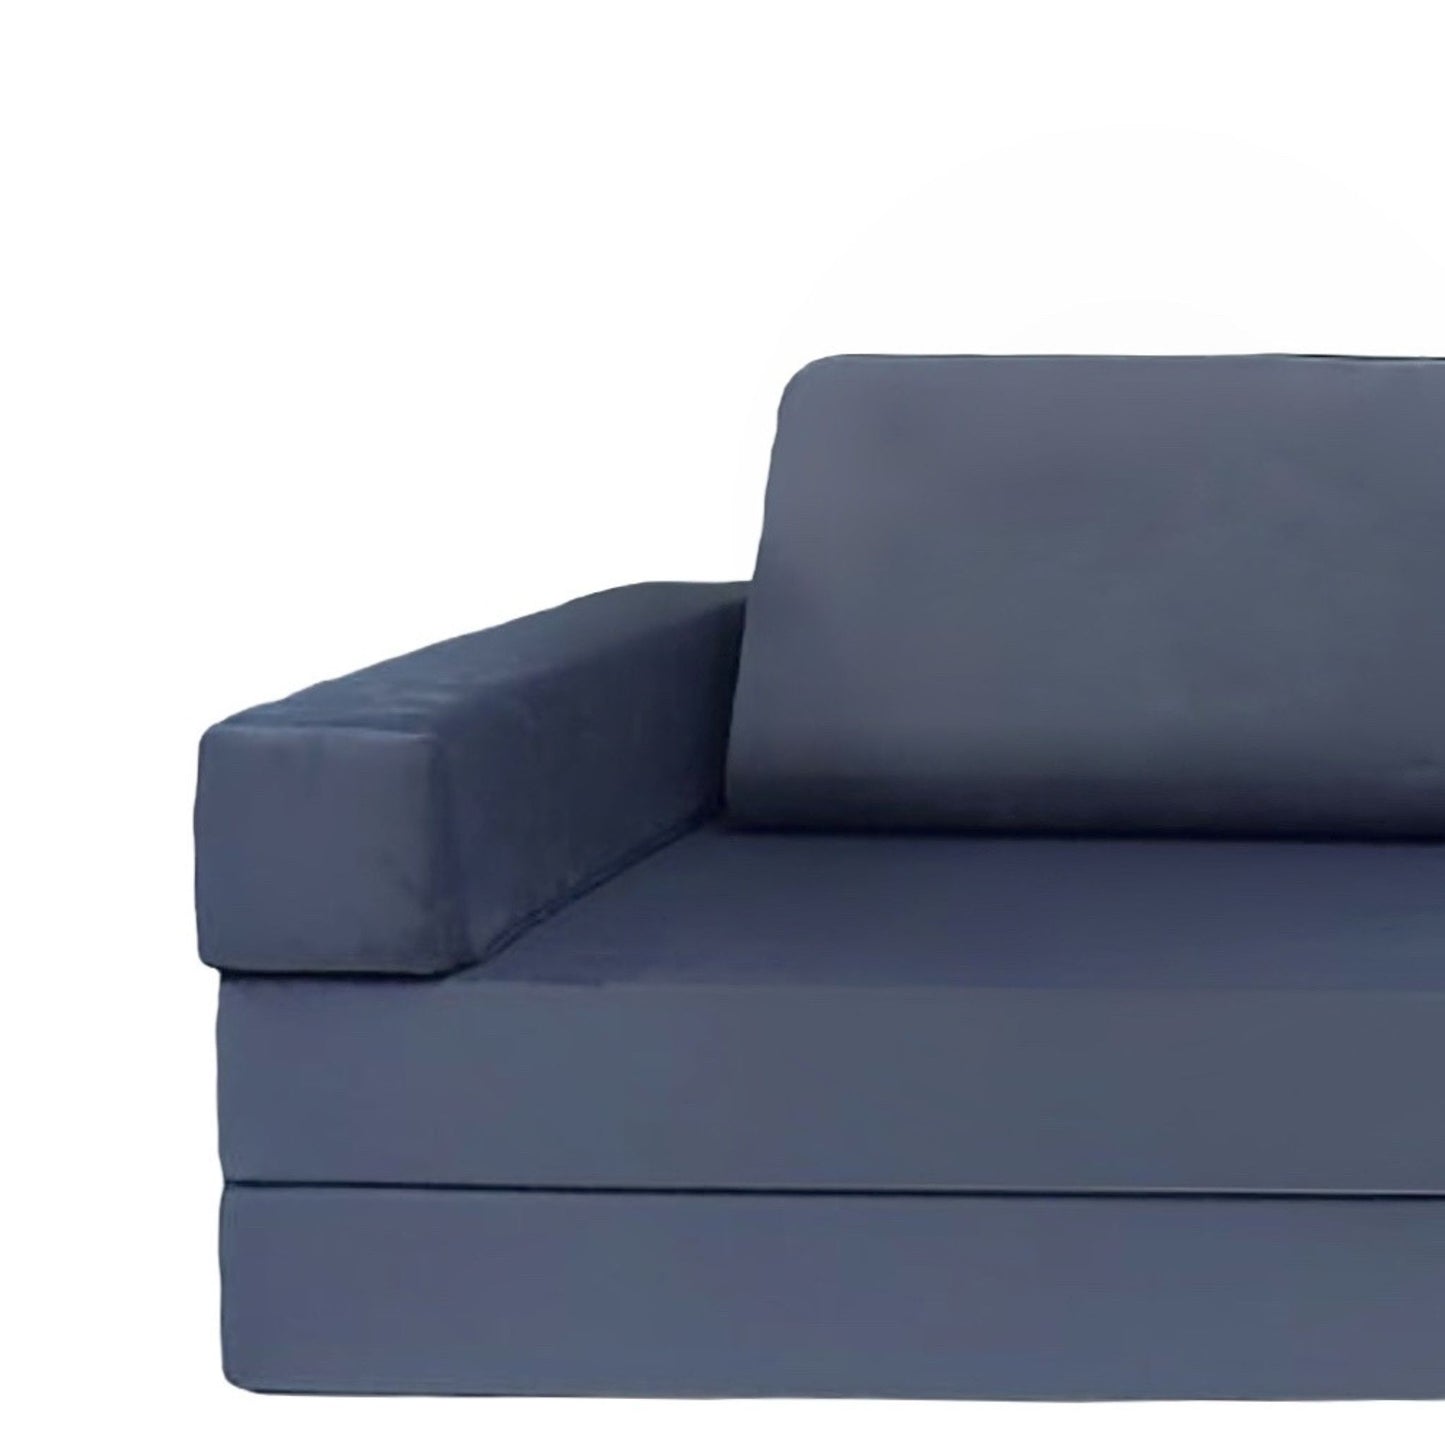 best soft play sofa set in dubai, cylinder bundle buy, 10 cushion sofa, 10 cushion couch, sofa with washable cushions in dubai, soft cushion sofas area dubai, soft play sofa bundle in dubai